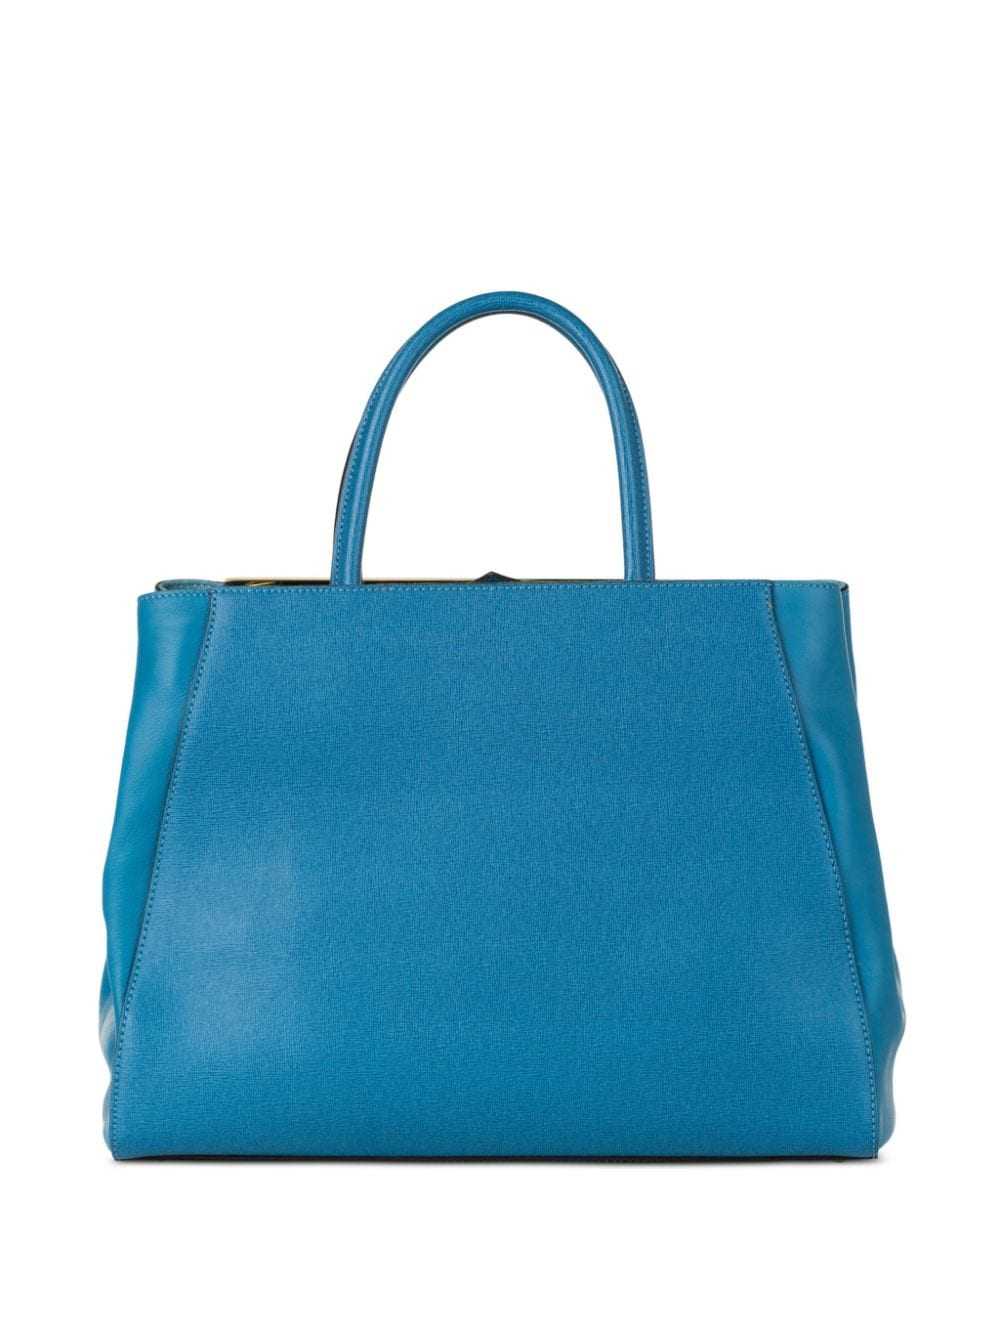 Fendi Pre-Owned 2Jours satchel - Blue - image 2